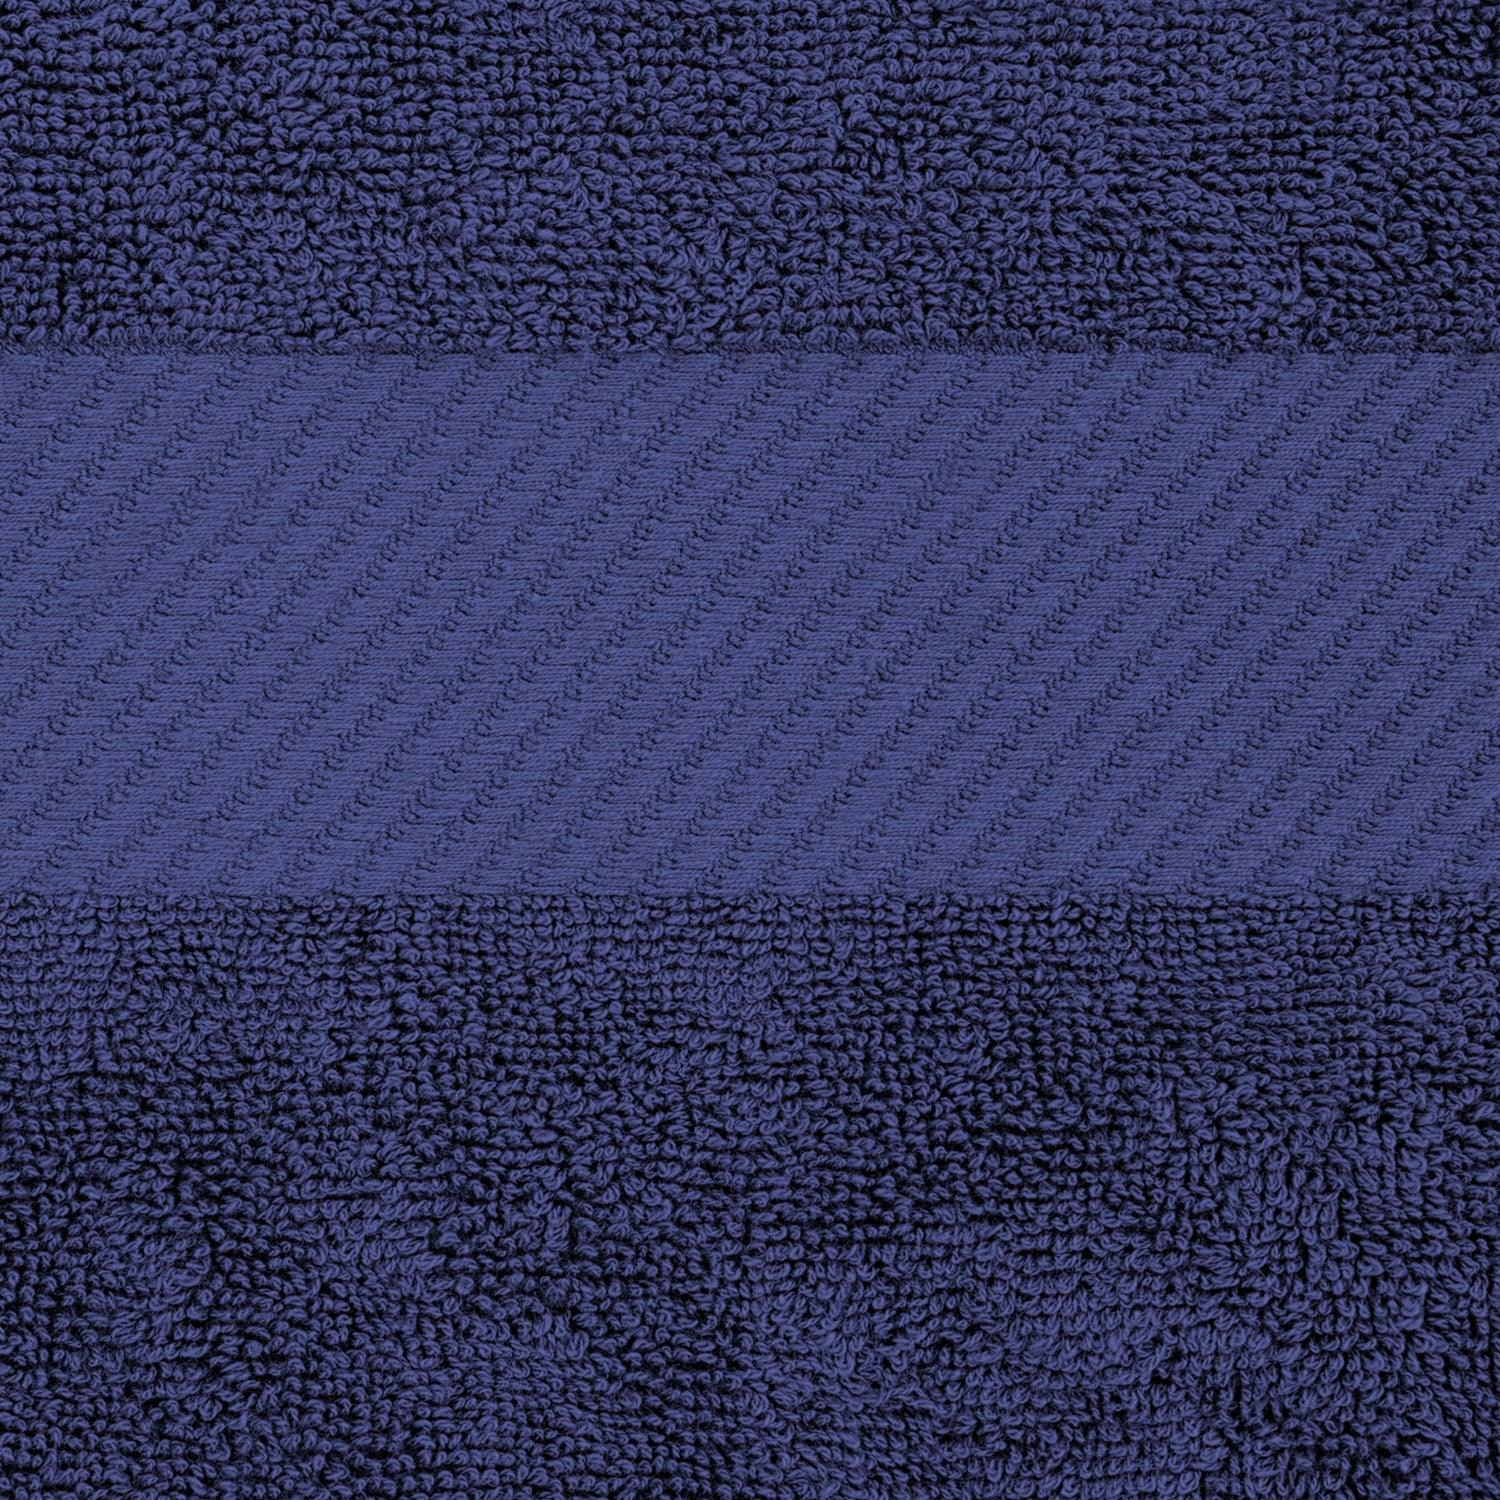 Egyptian Cotton Dobby Border Medium Weight 2 Piece Bath Sheet Set - Navy Blue